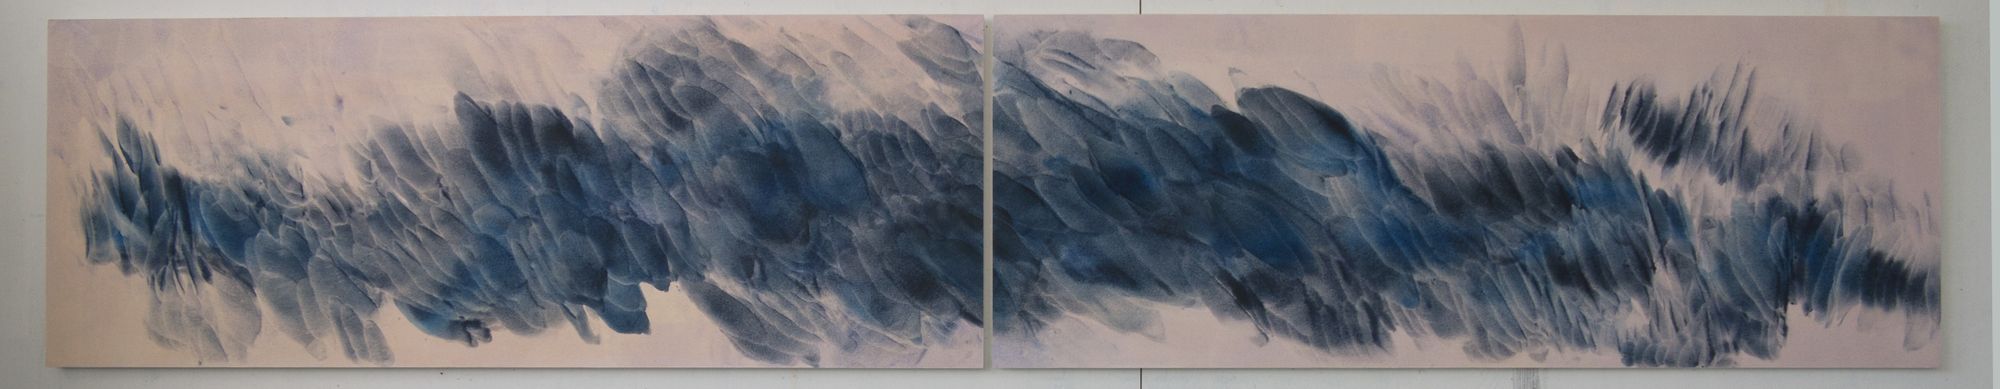 Wind, diptyque 52 x 290 cm, 2015, vendu